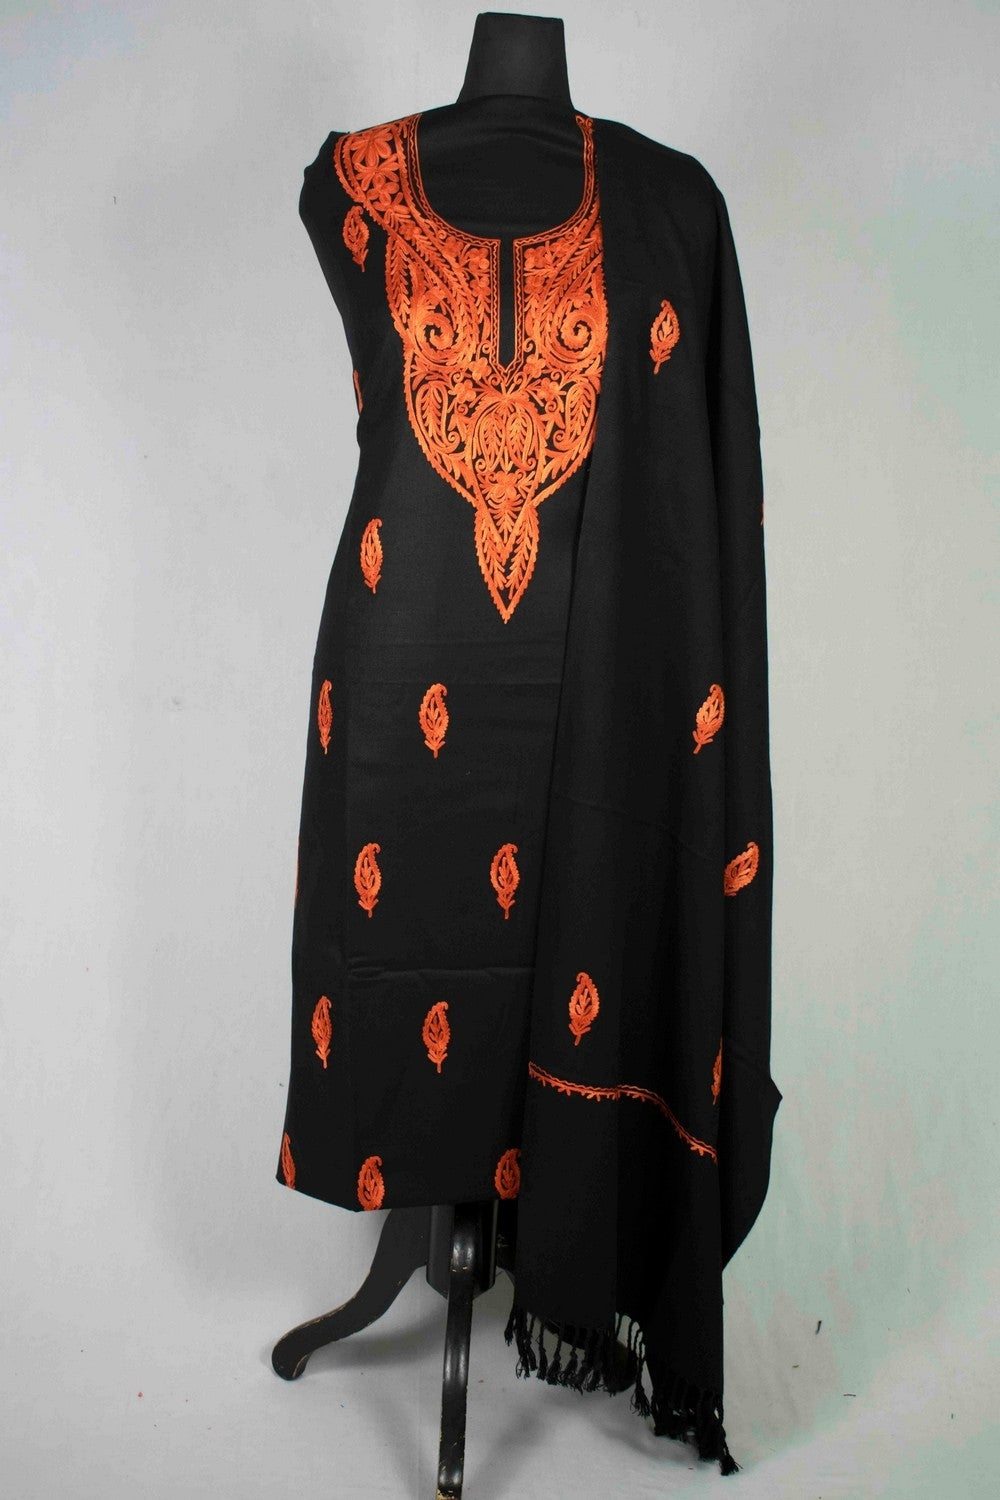 Pitch Black Color Kashmiri Aari Work Heavy Neck Embroidered